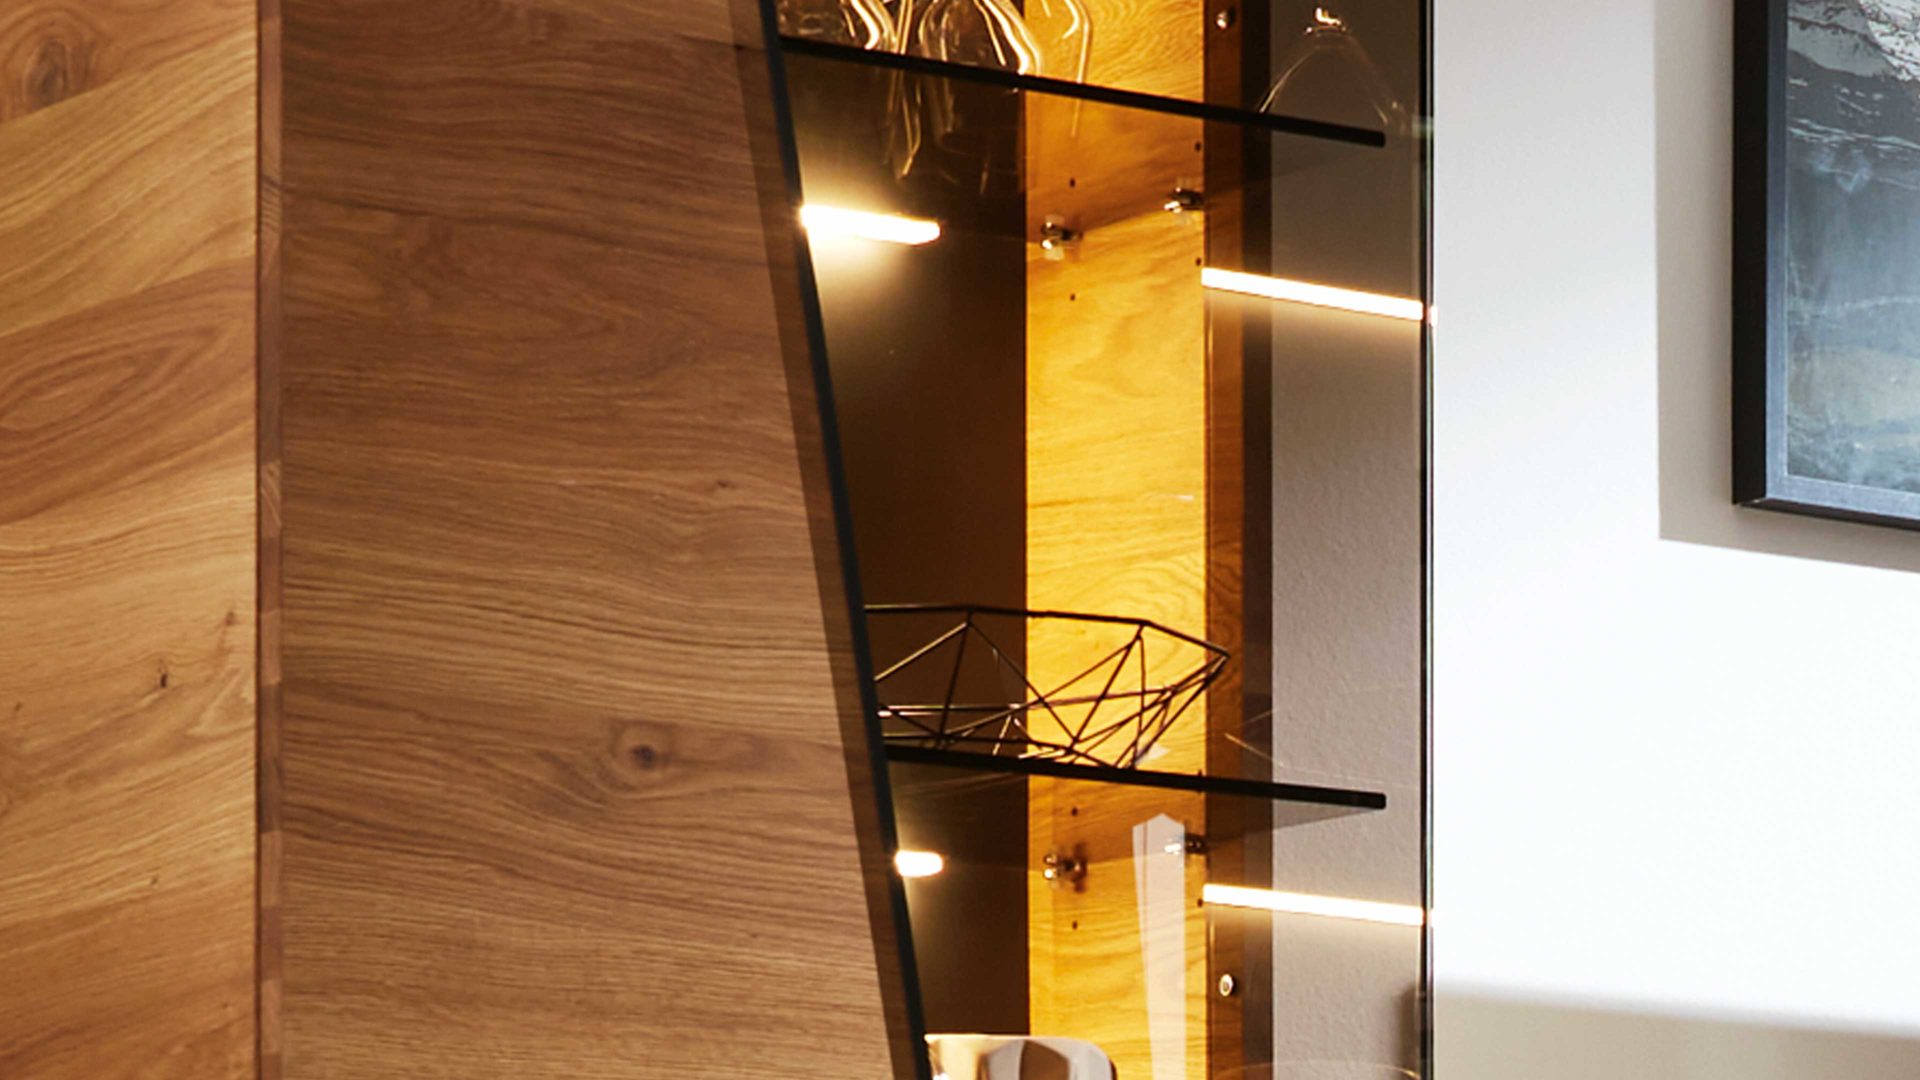 LED-Beleuchtung Interliving aus Kunststoff in Weiß Interliving Wohnzimmer Serie 2021 - LED-Beleuchtung 99 KR WW 51 1,44 Watt - Länge ca. 33 cm